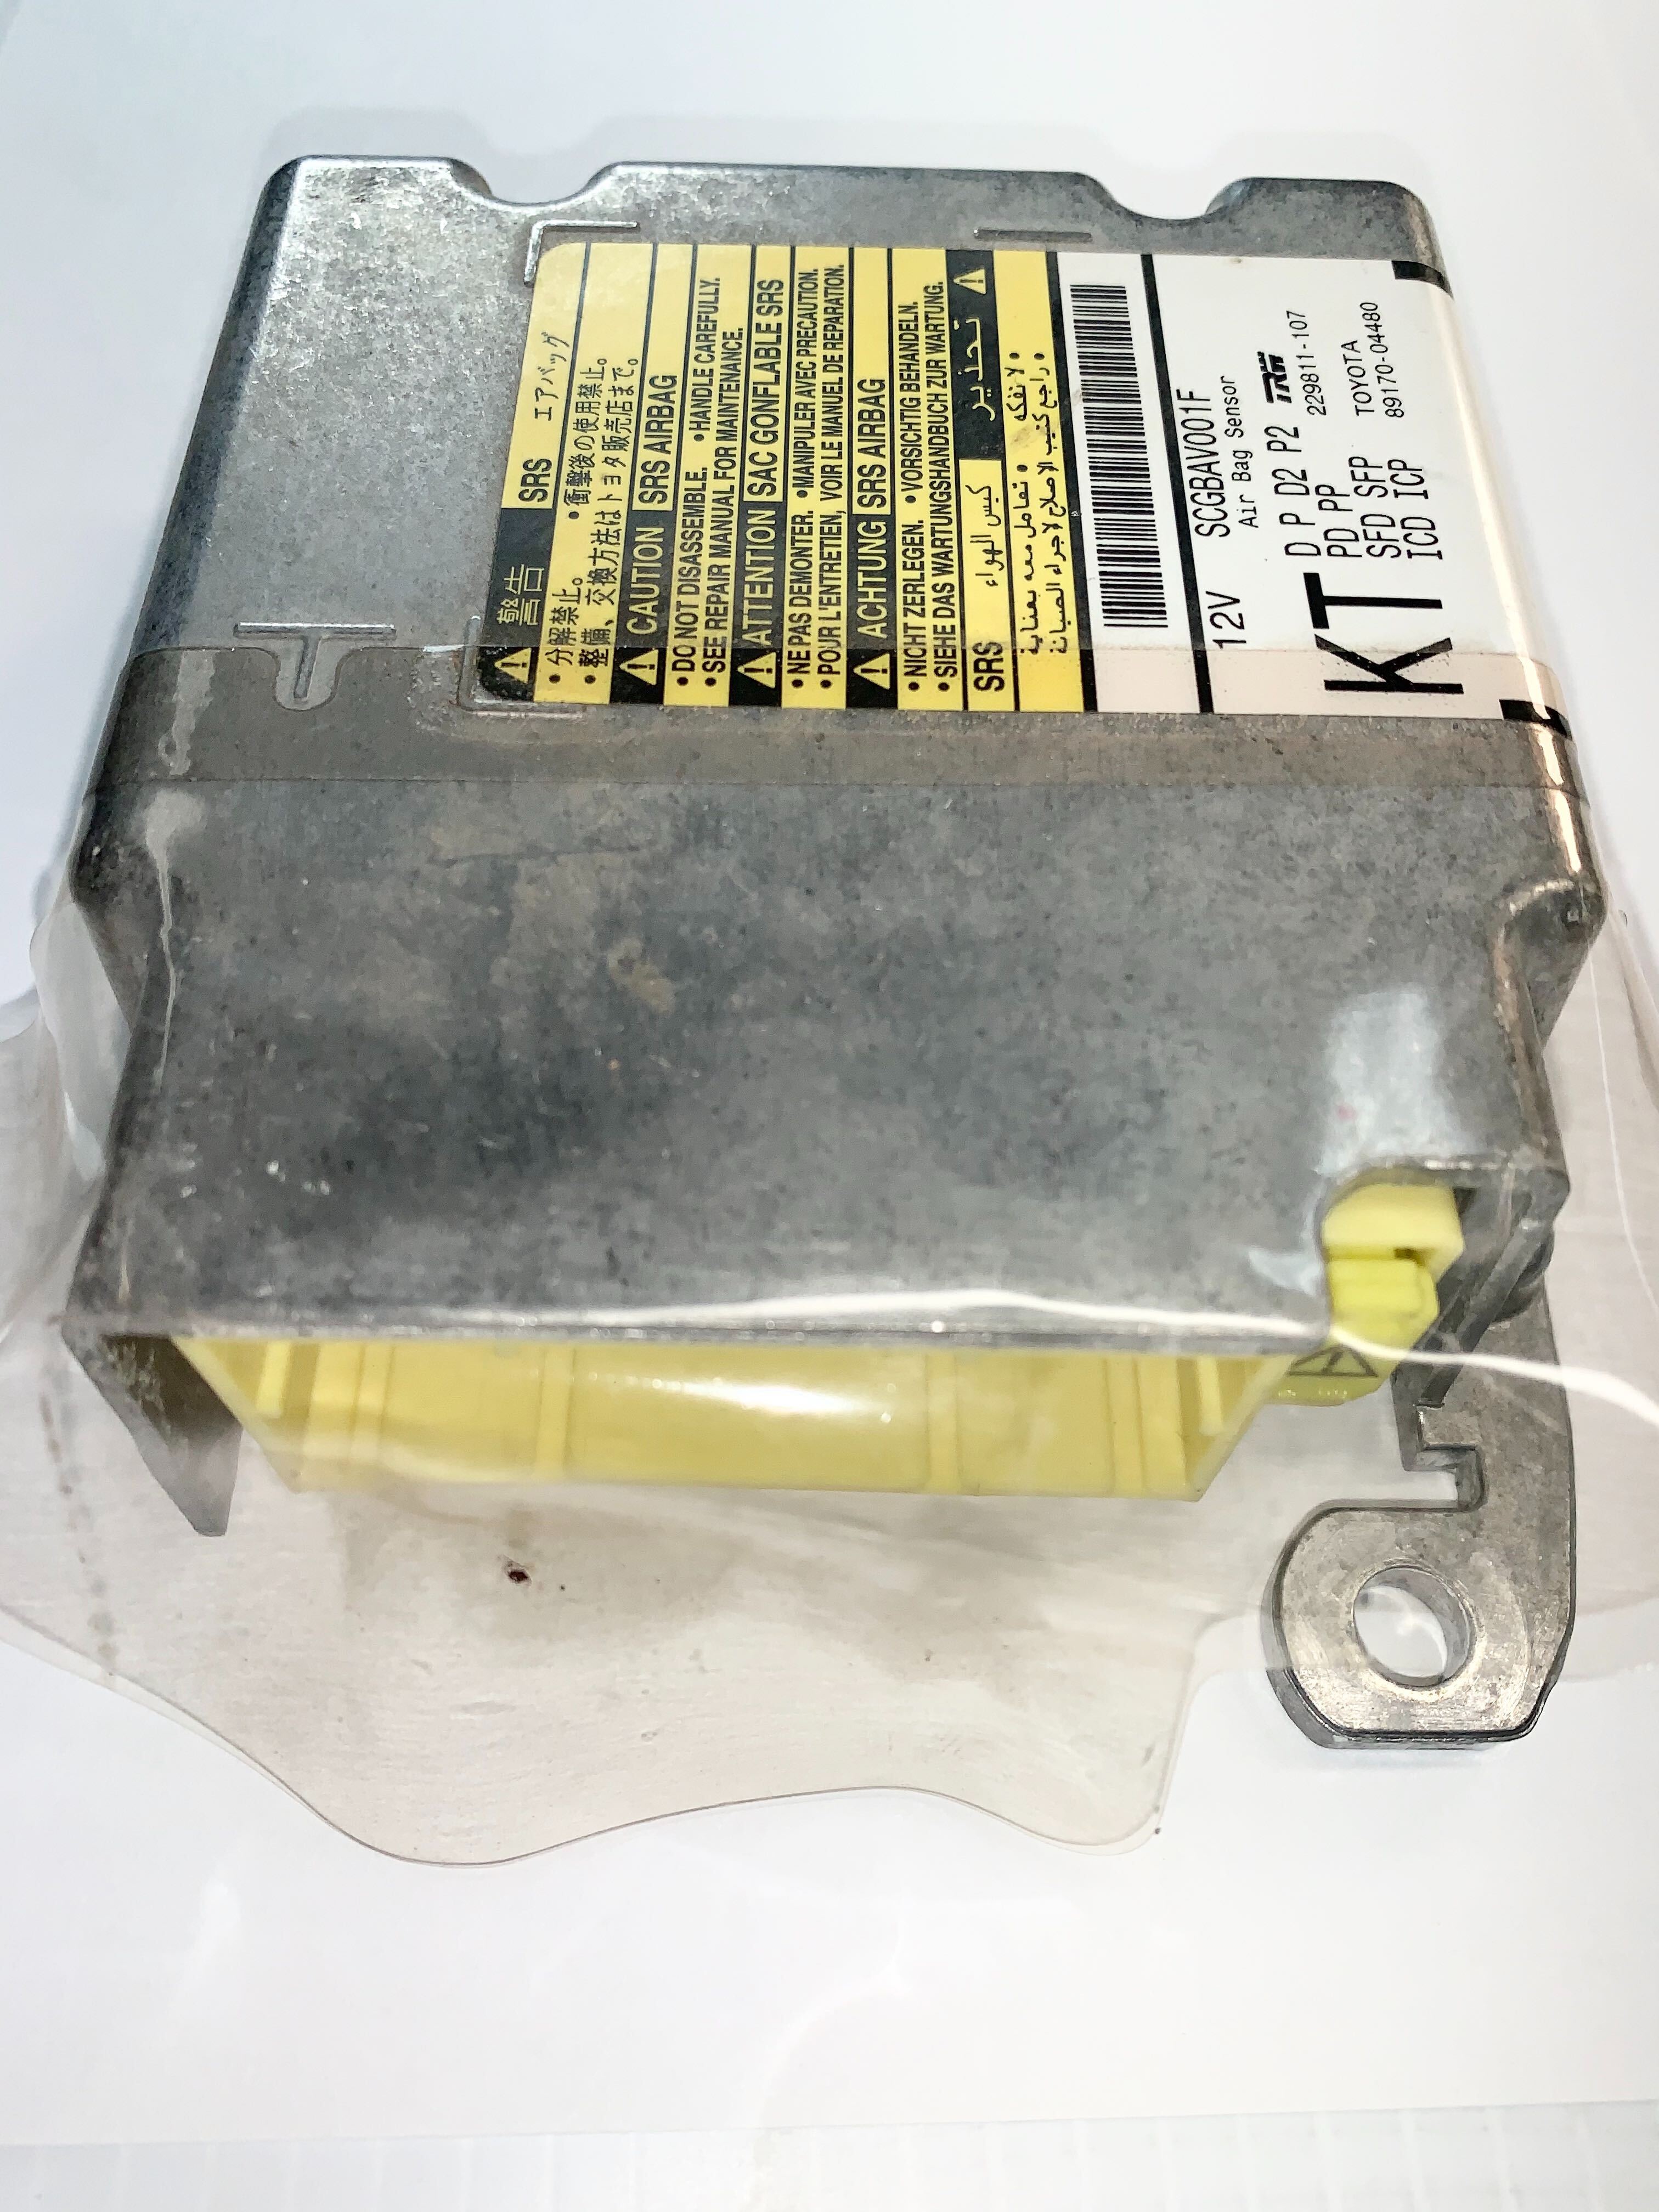 TOYOTA TACOMA SRS Airbag Computer Diagnostic Control Module PART #8917004480